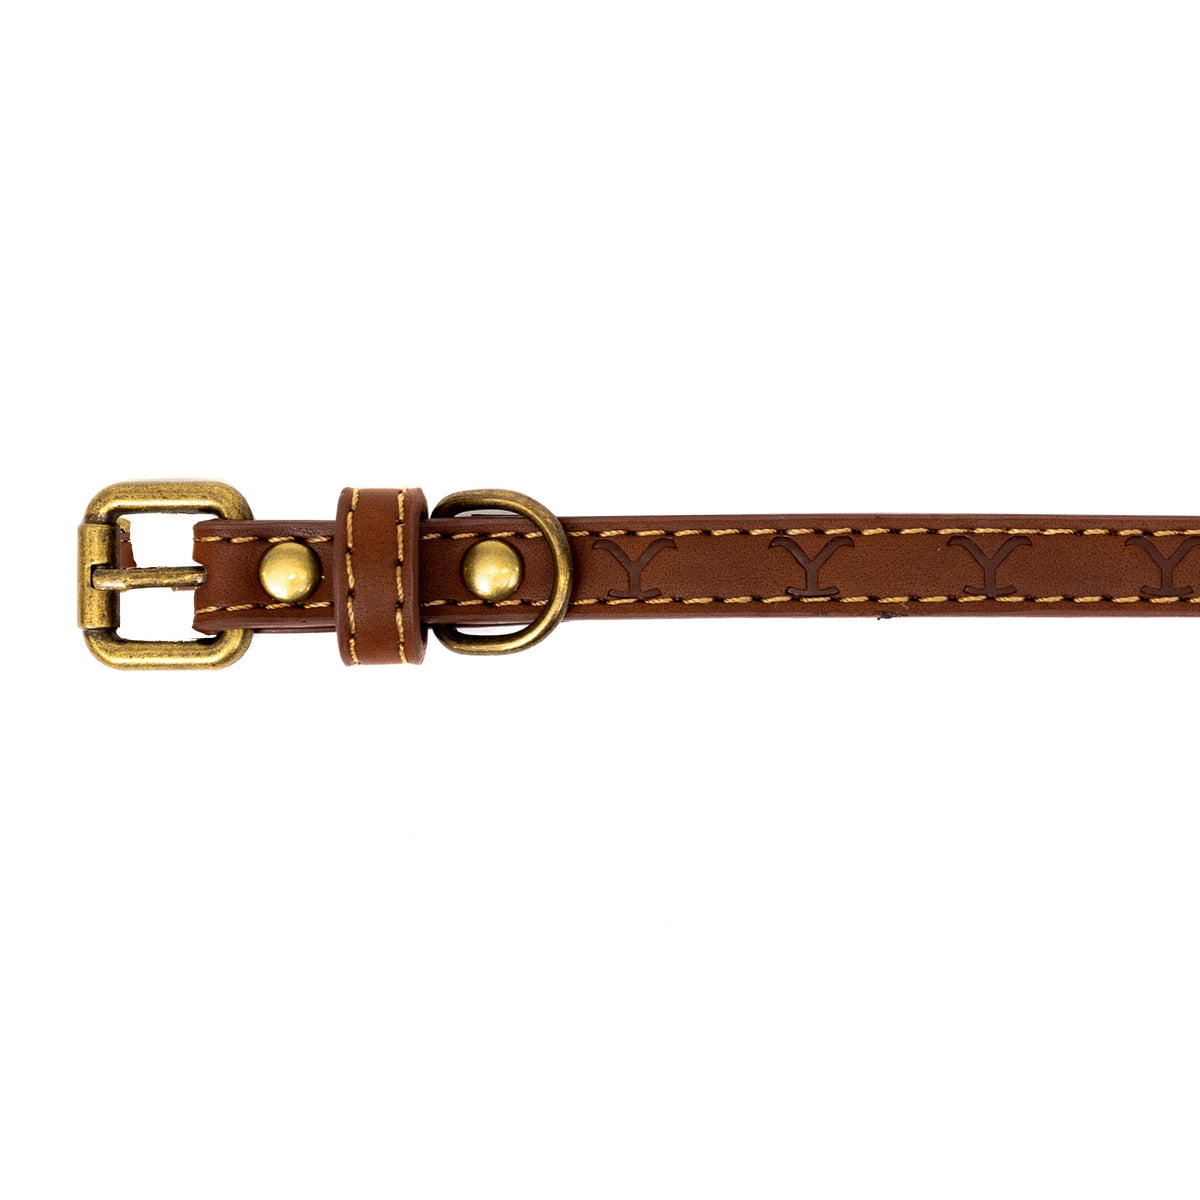 Vegan Leather Dog Collar - Yellowstone Dutton Ranch Logo Debossed Brown PU Leather